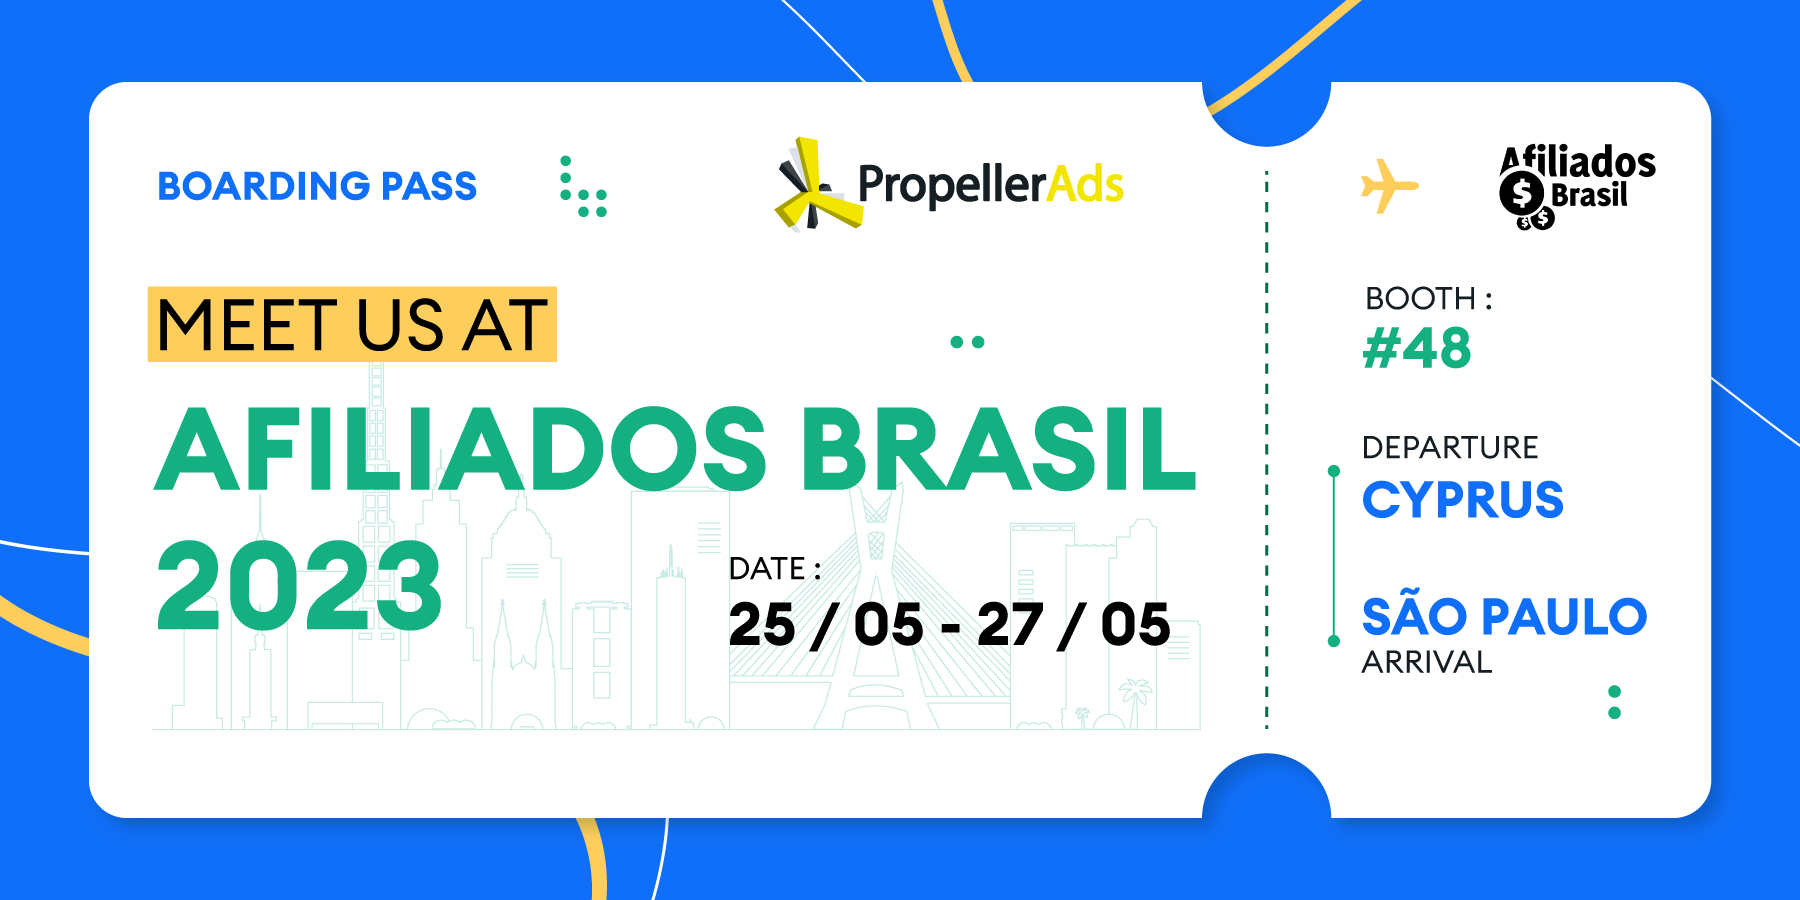 PropellerAds_Afiliados_Brazil_conference_attnedance image